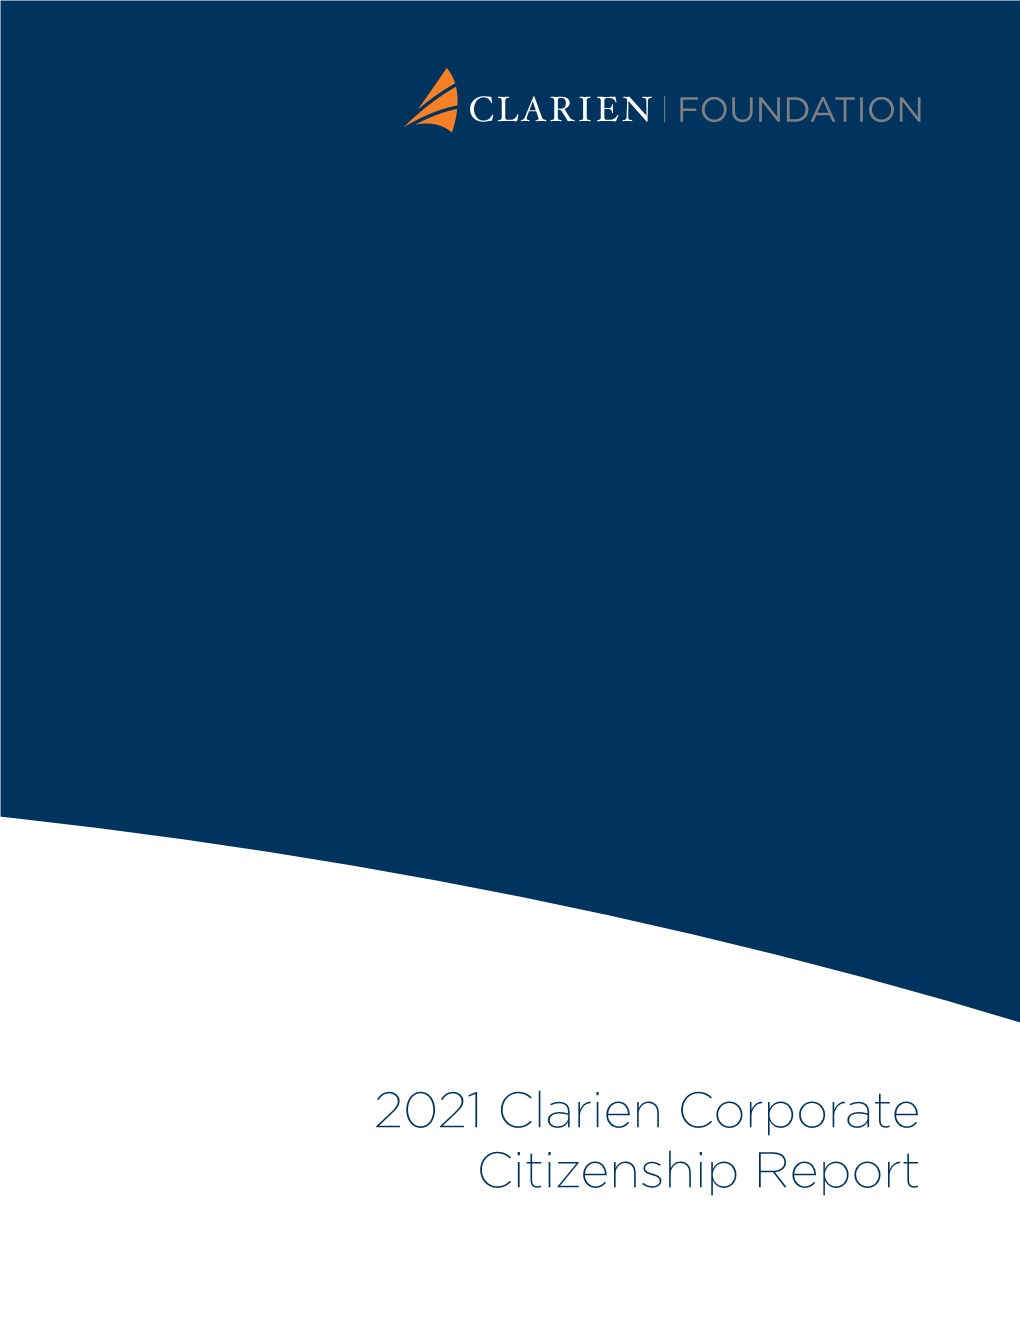 View 2021 Clarien Corporate Citizenship Report